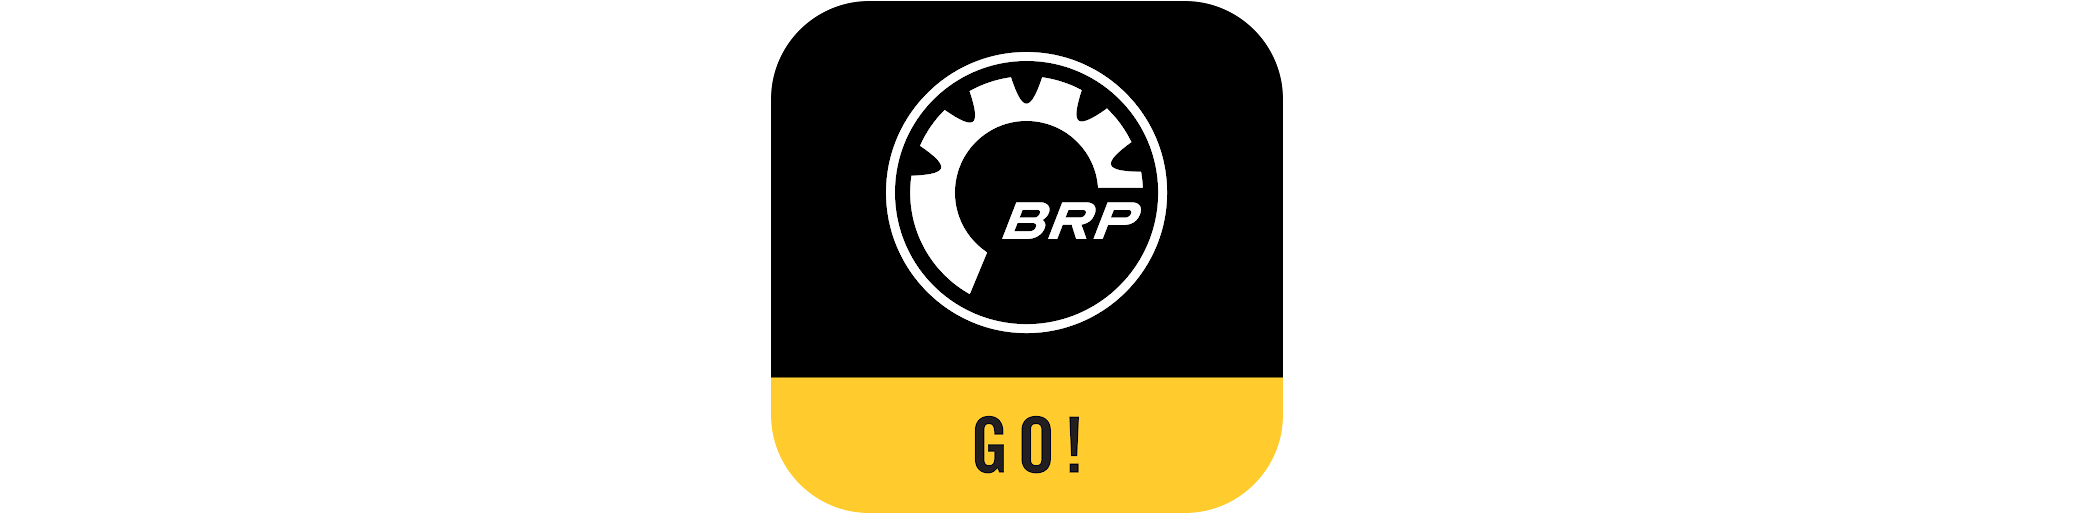 BRP GO! לוגו האפליקציה